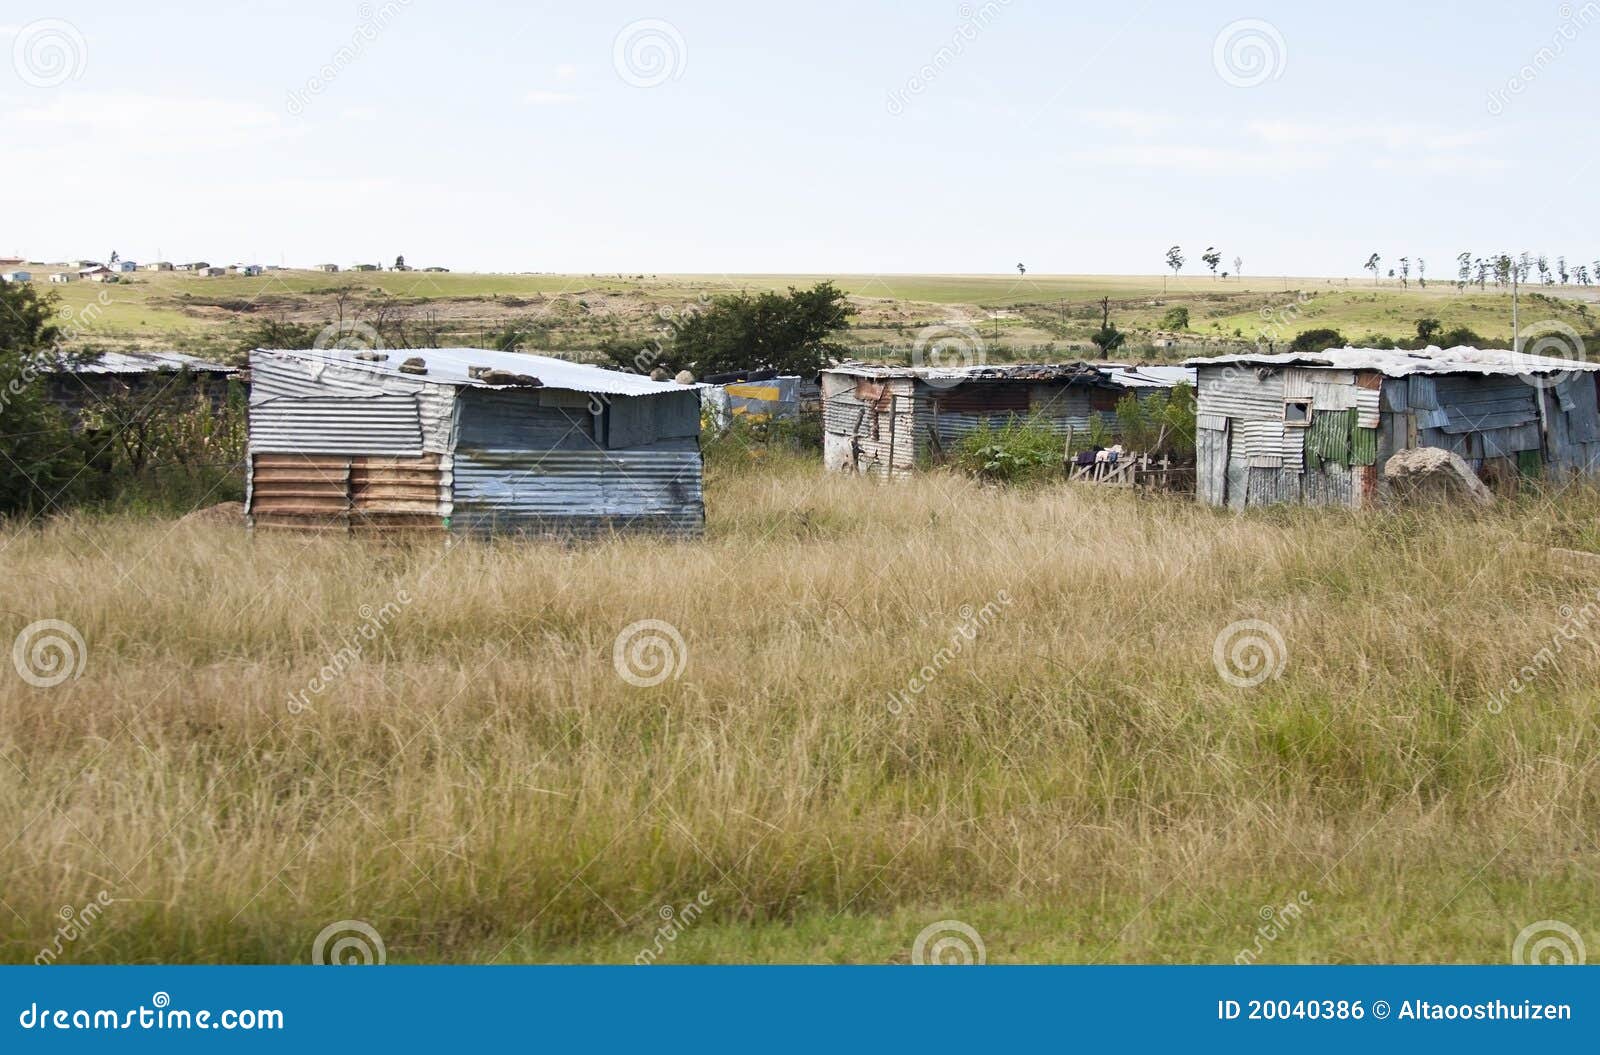 shacks in transkei south africa